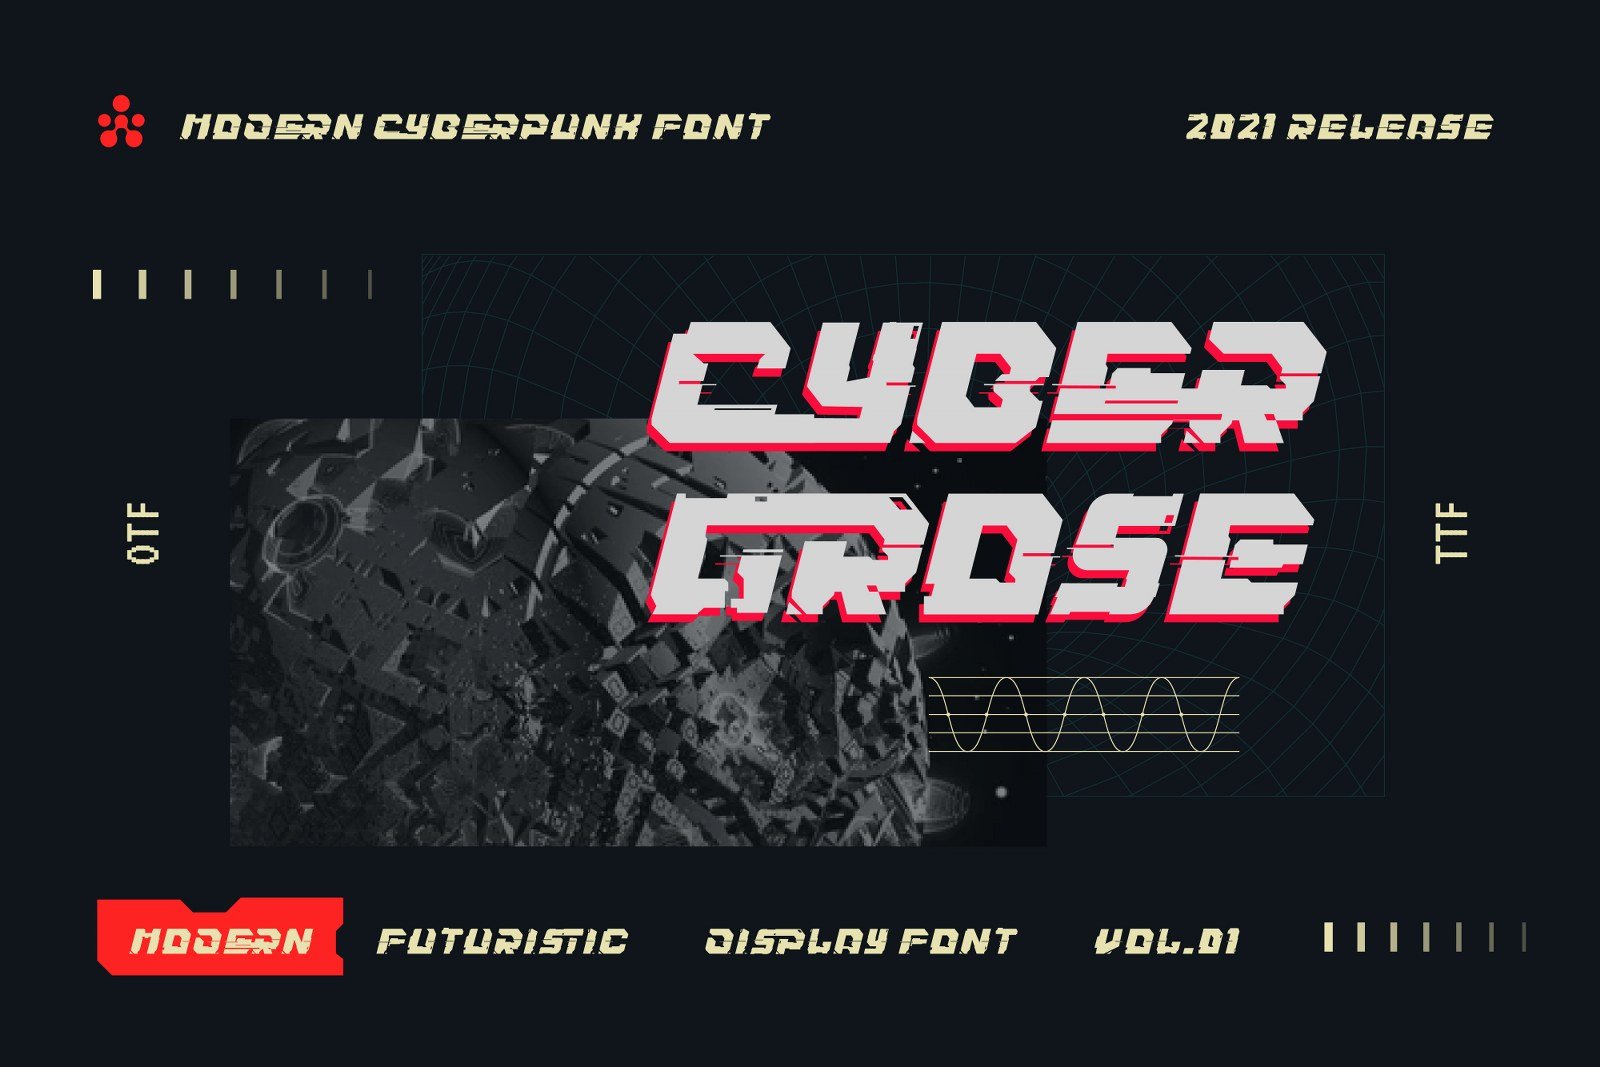 Cybergrose - Cyberpunk Display Font cover image.